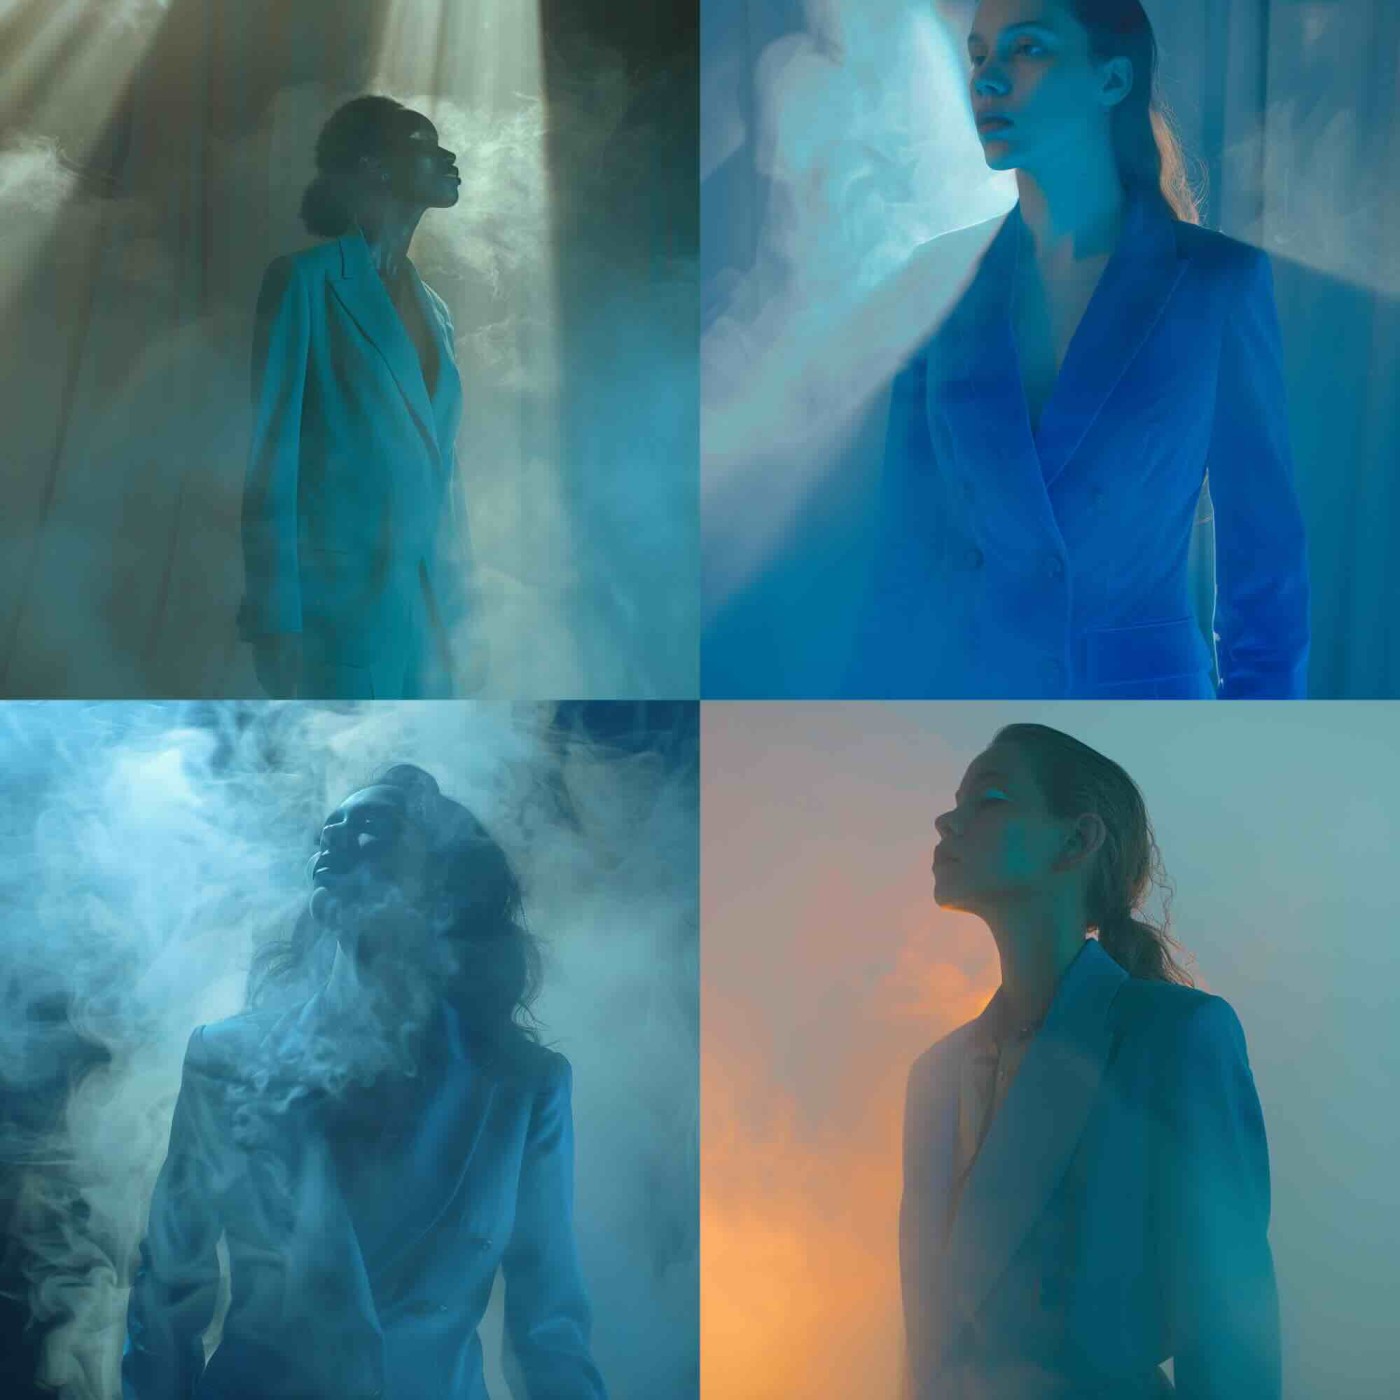 A woman wearing a blue suit, volumetric lighting through fog